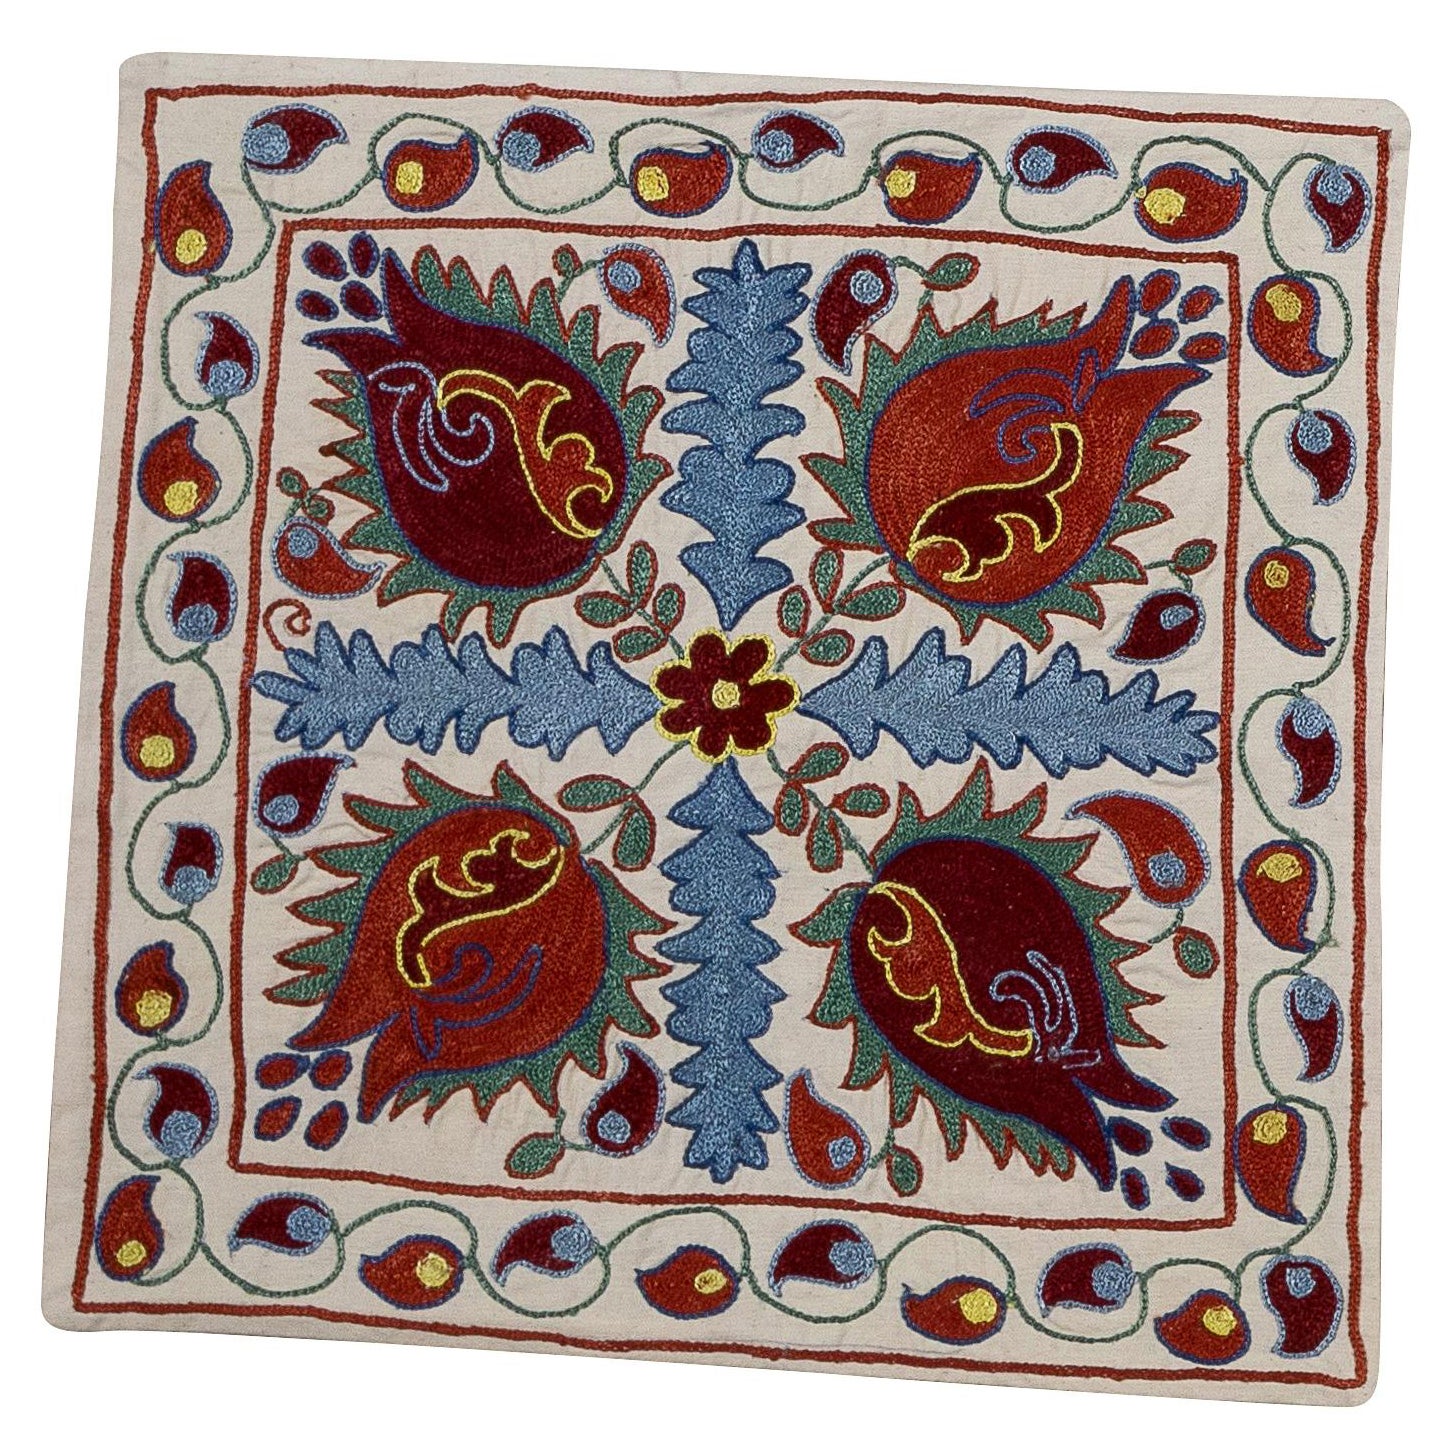  18"x18" Uzbek Suzani Lace Pillow, Embroidered Cream Cushion Cover, Silk Sham